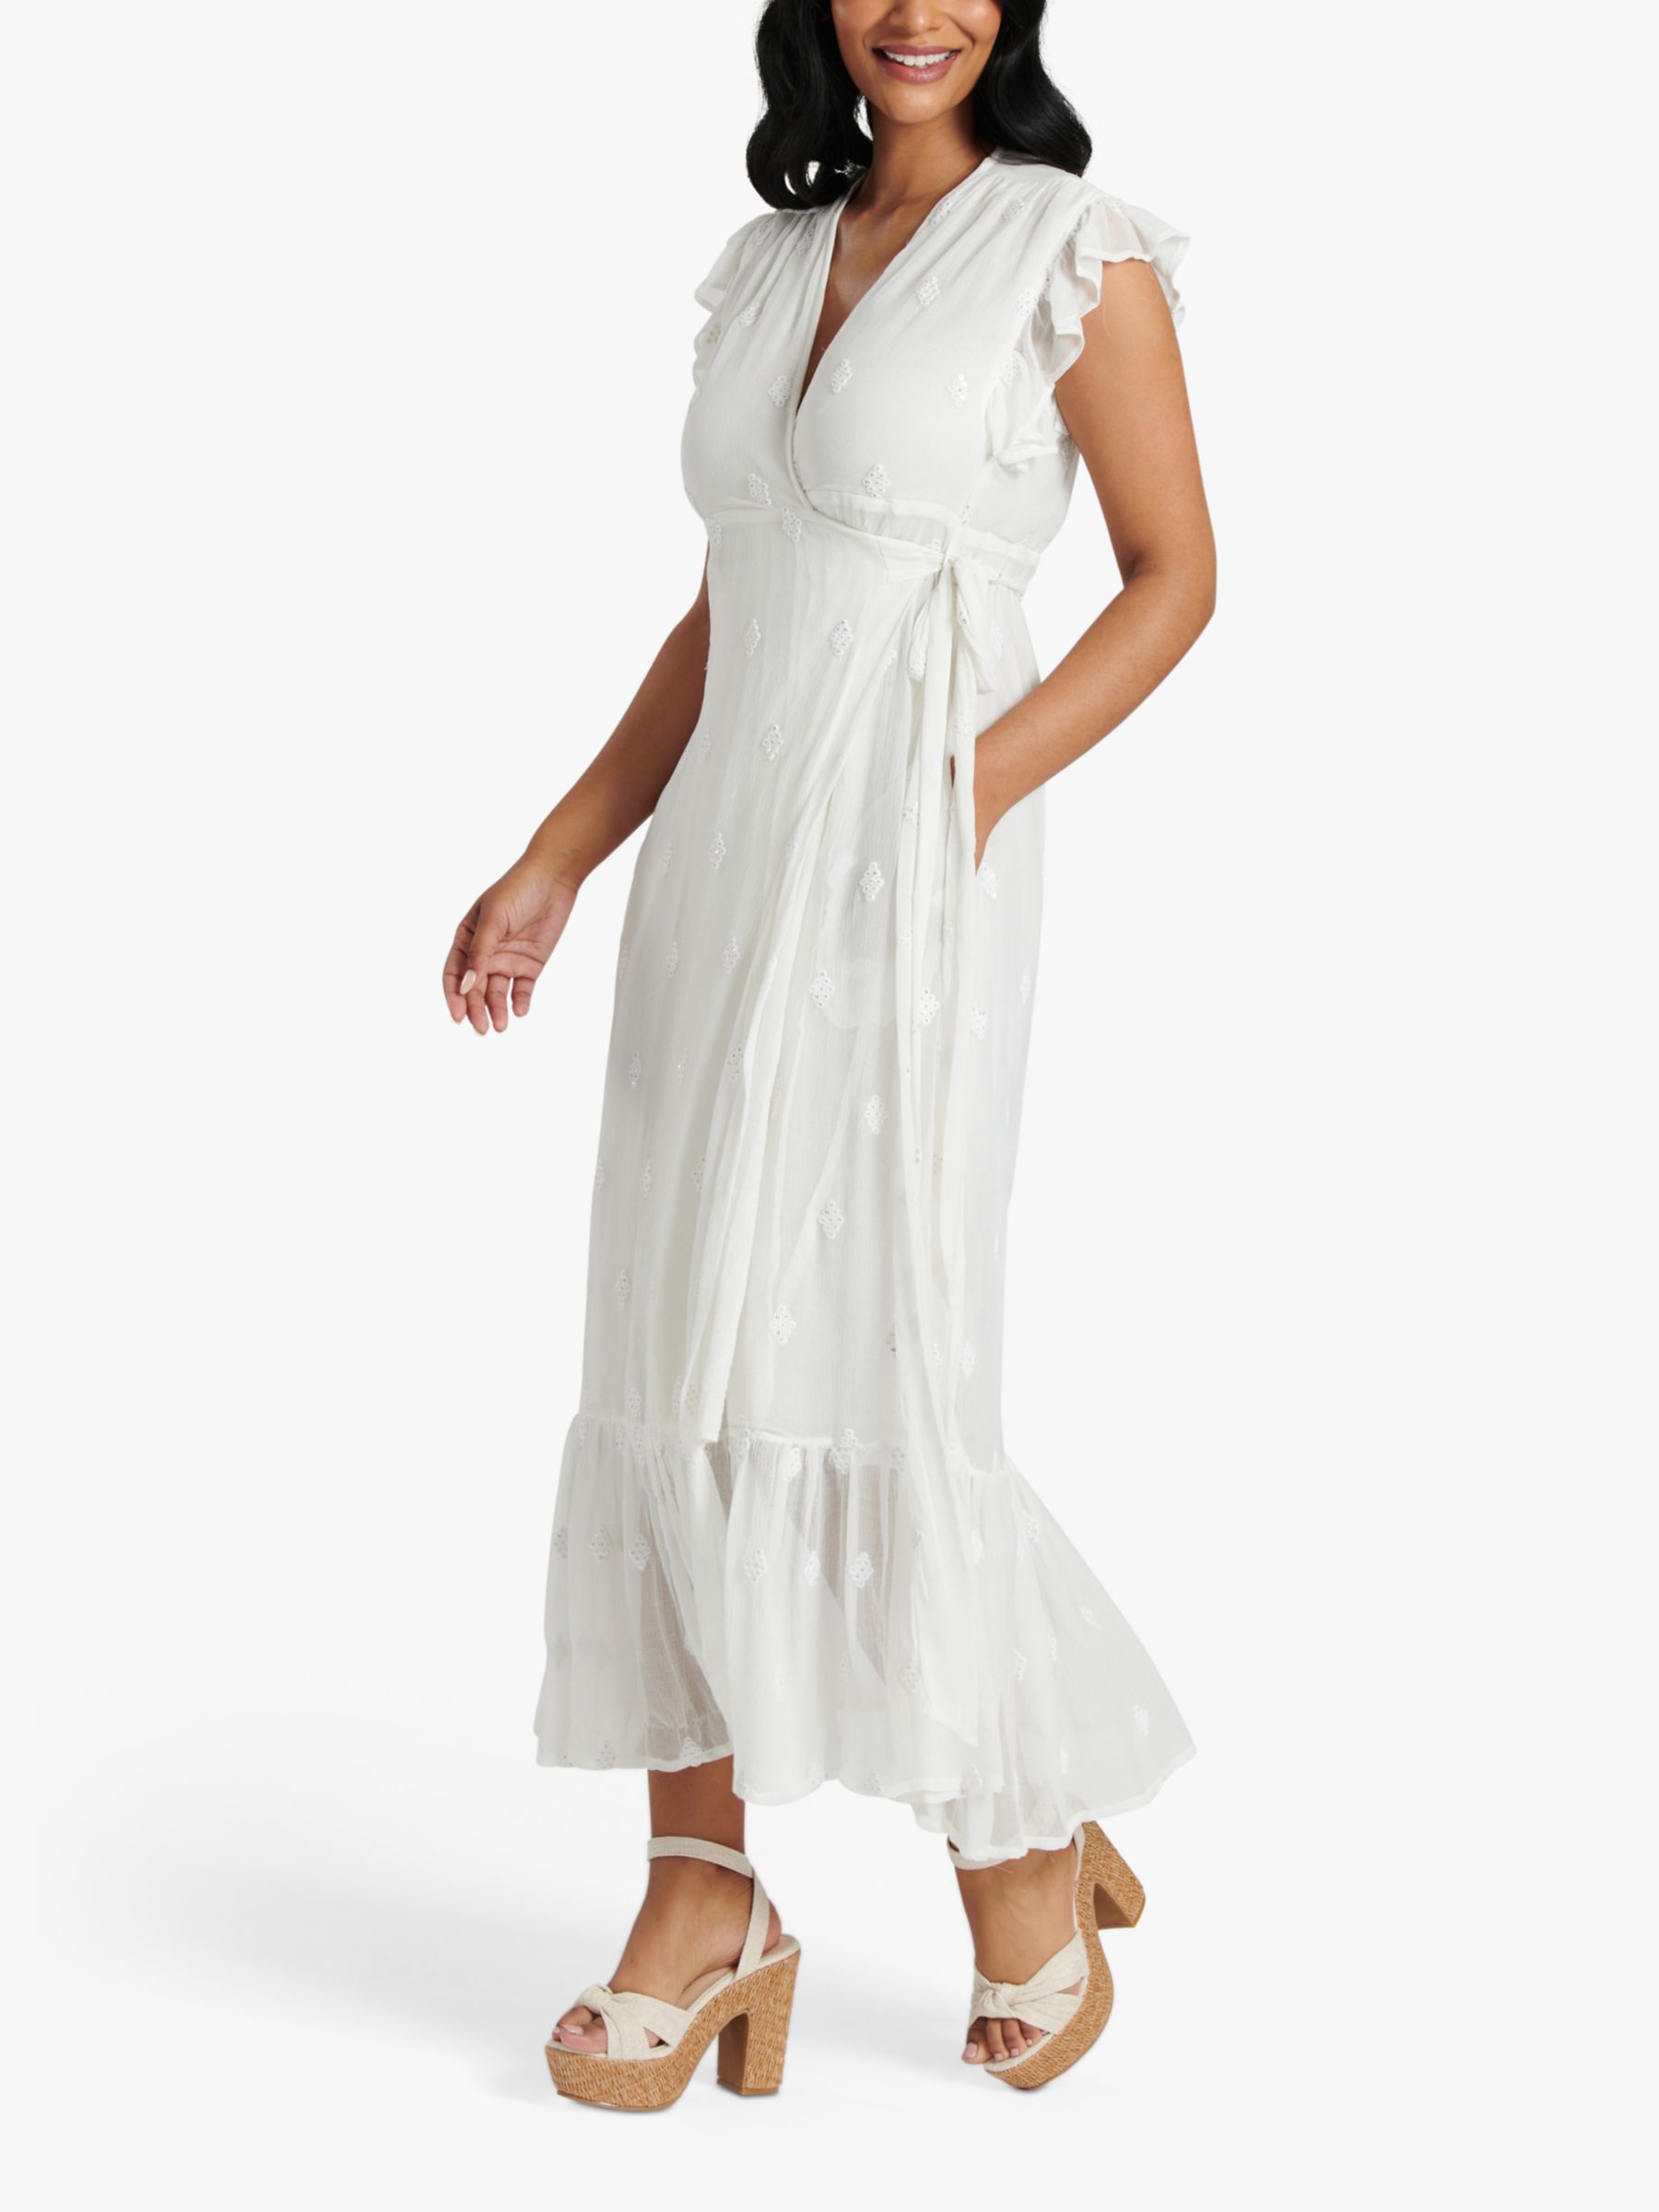 South Beach Sequin Detail Wrap Midi Dress, White, 8